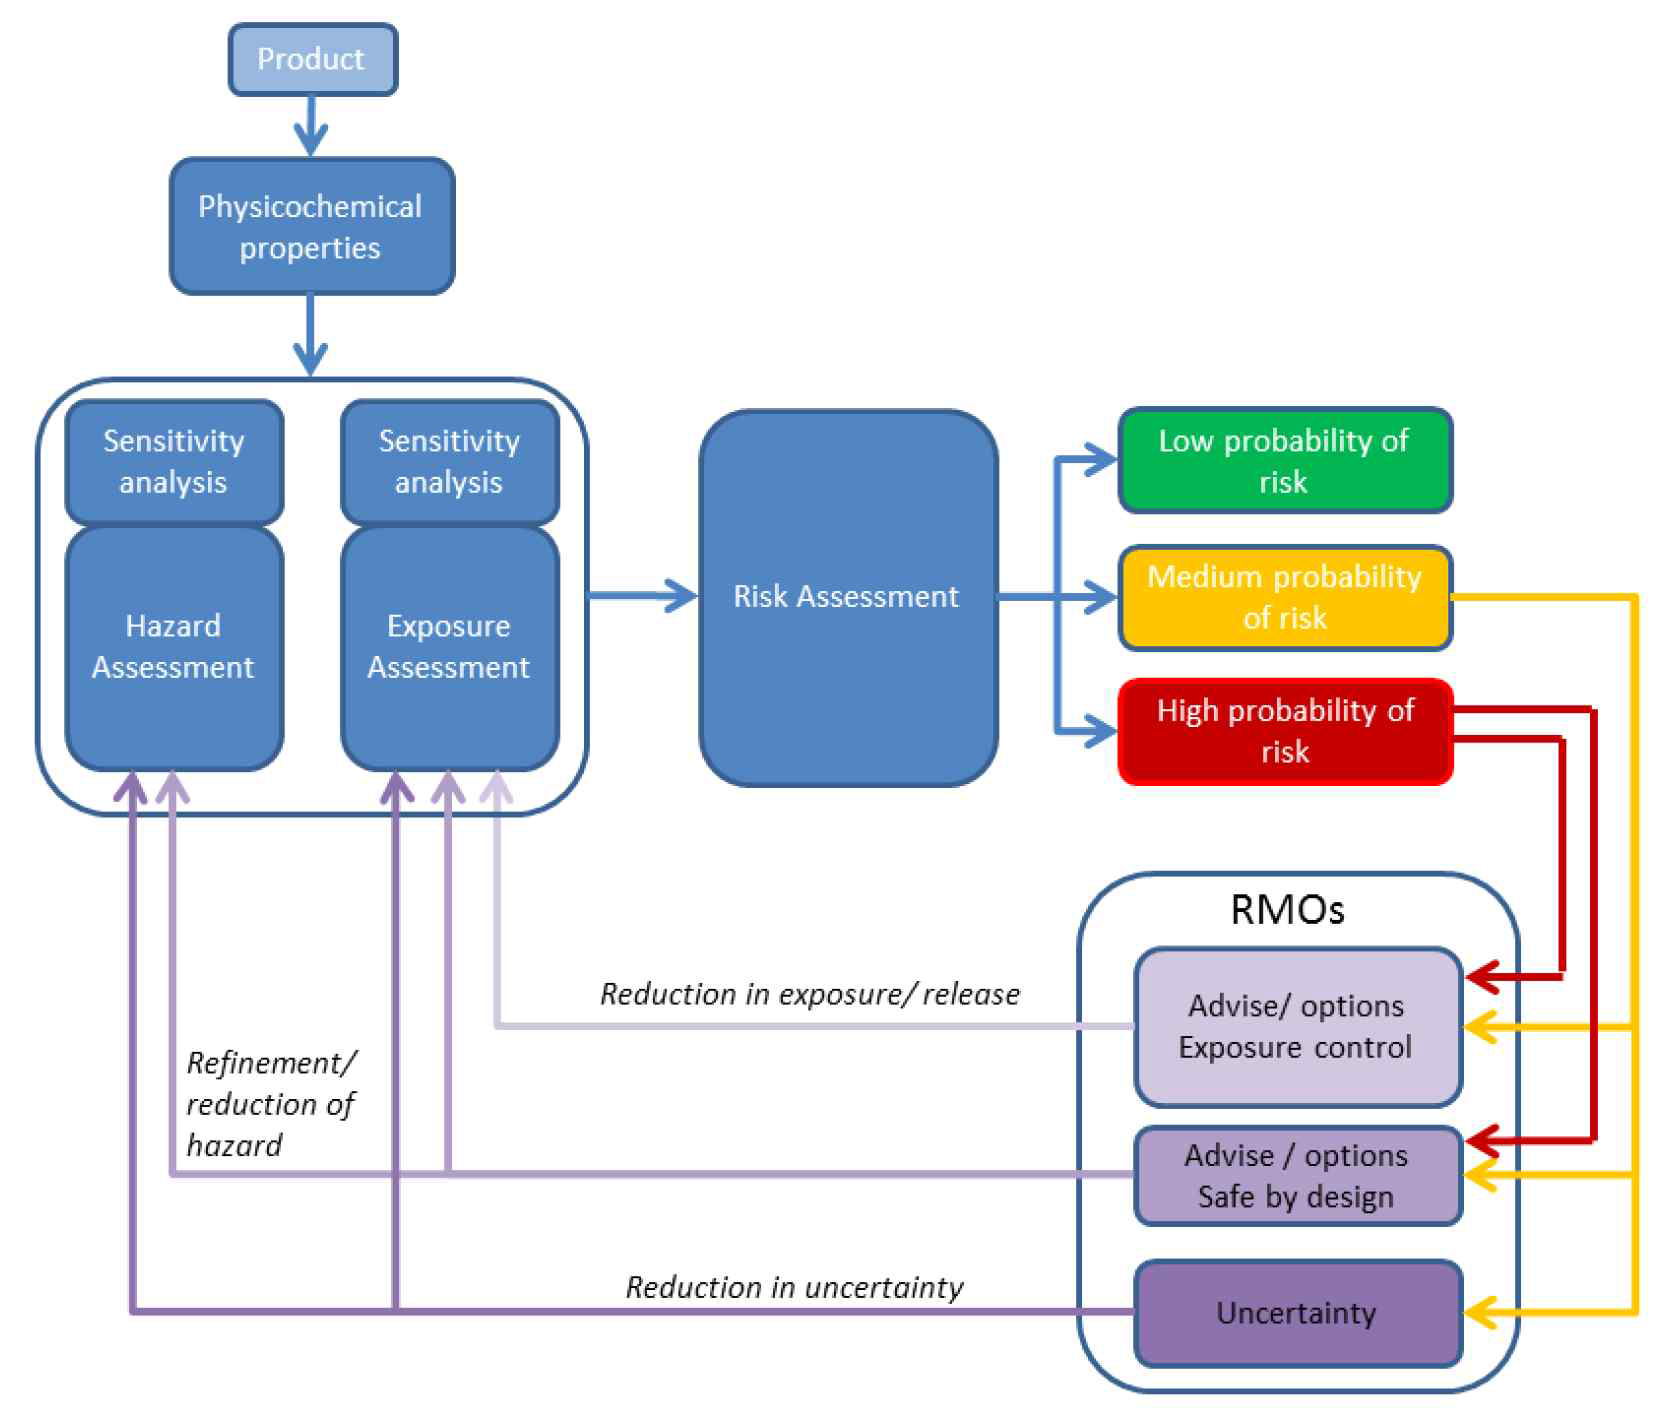 “Description of a nanocosmetics tool for risk assessment” 보고서에서 제시한 나노화장품 위해평가툴의 기본 도식